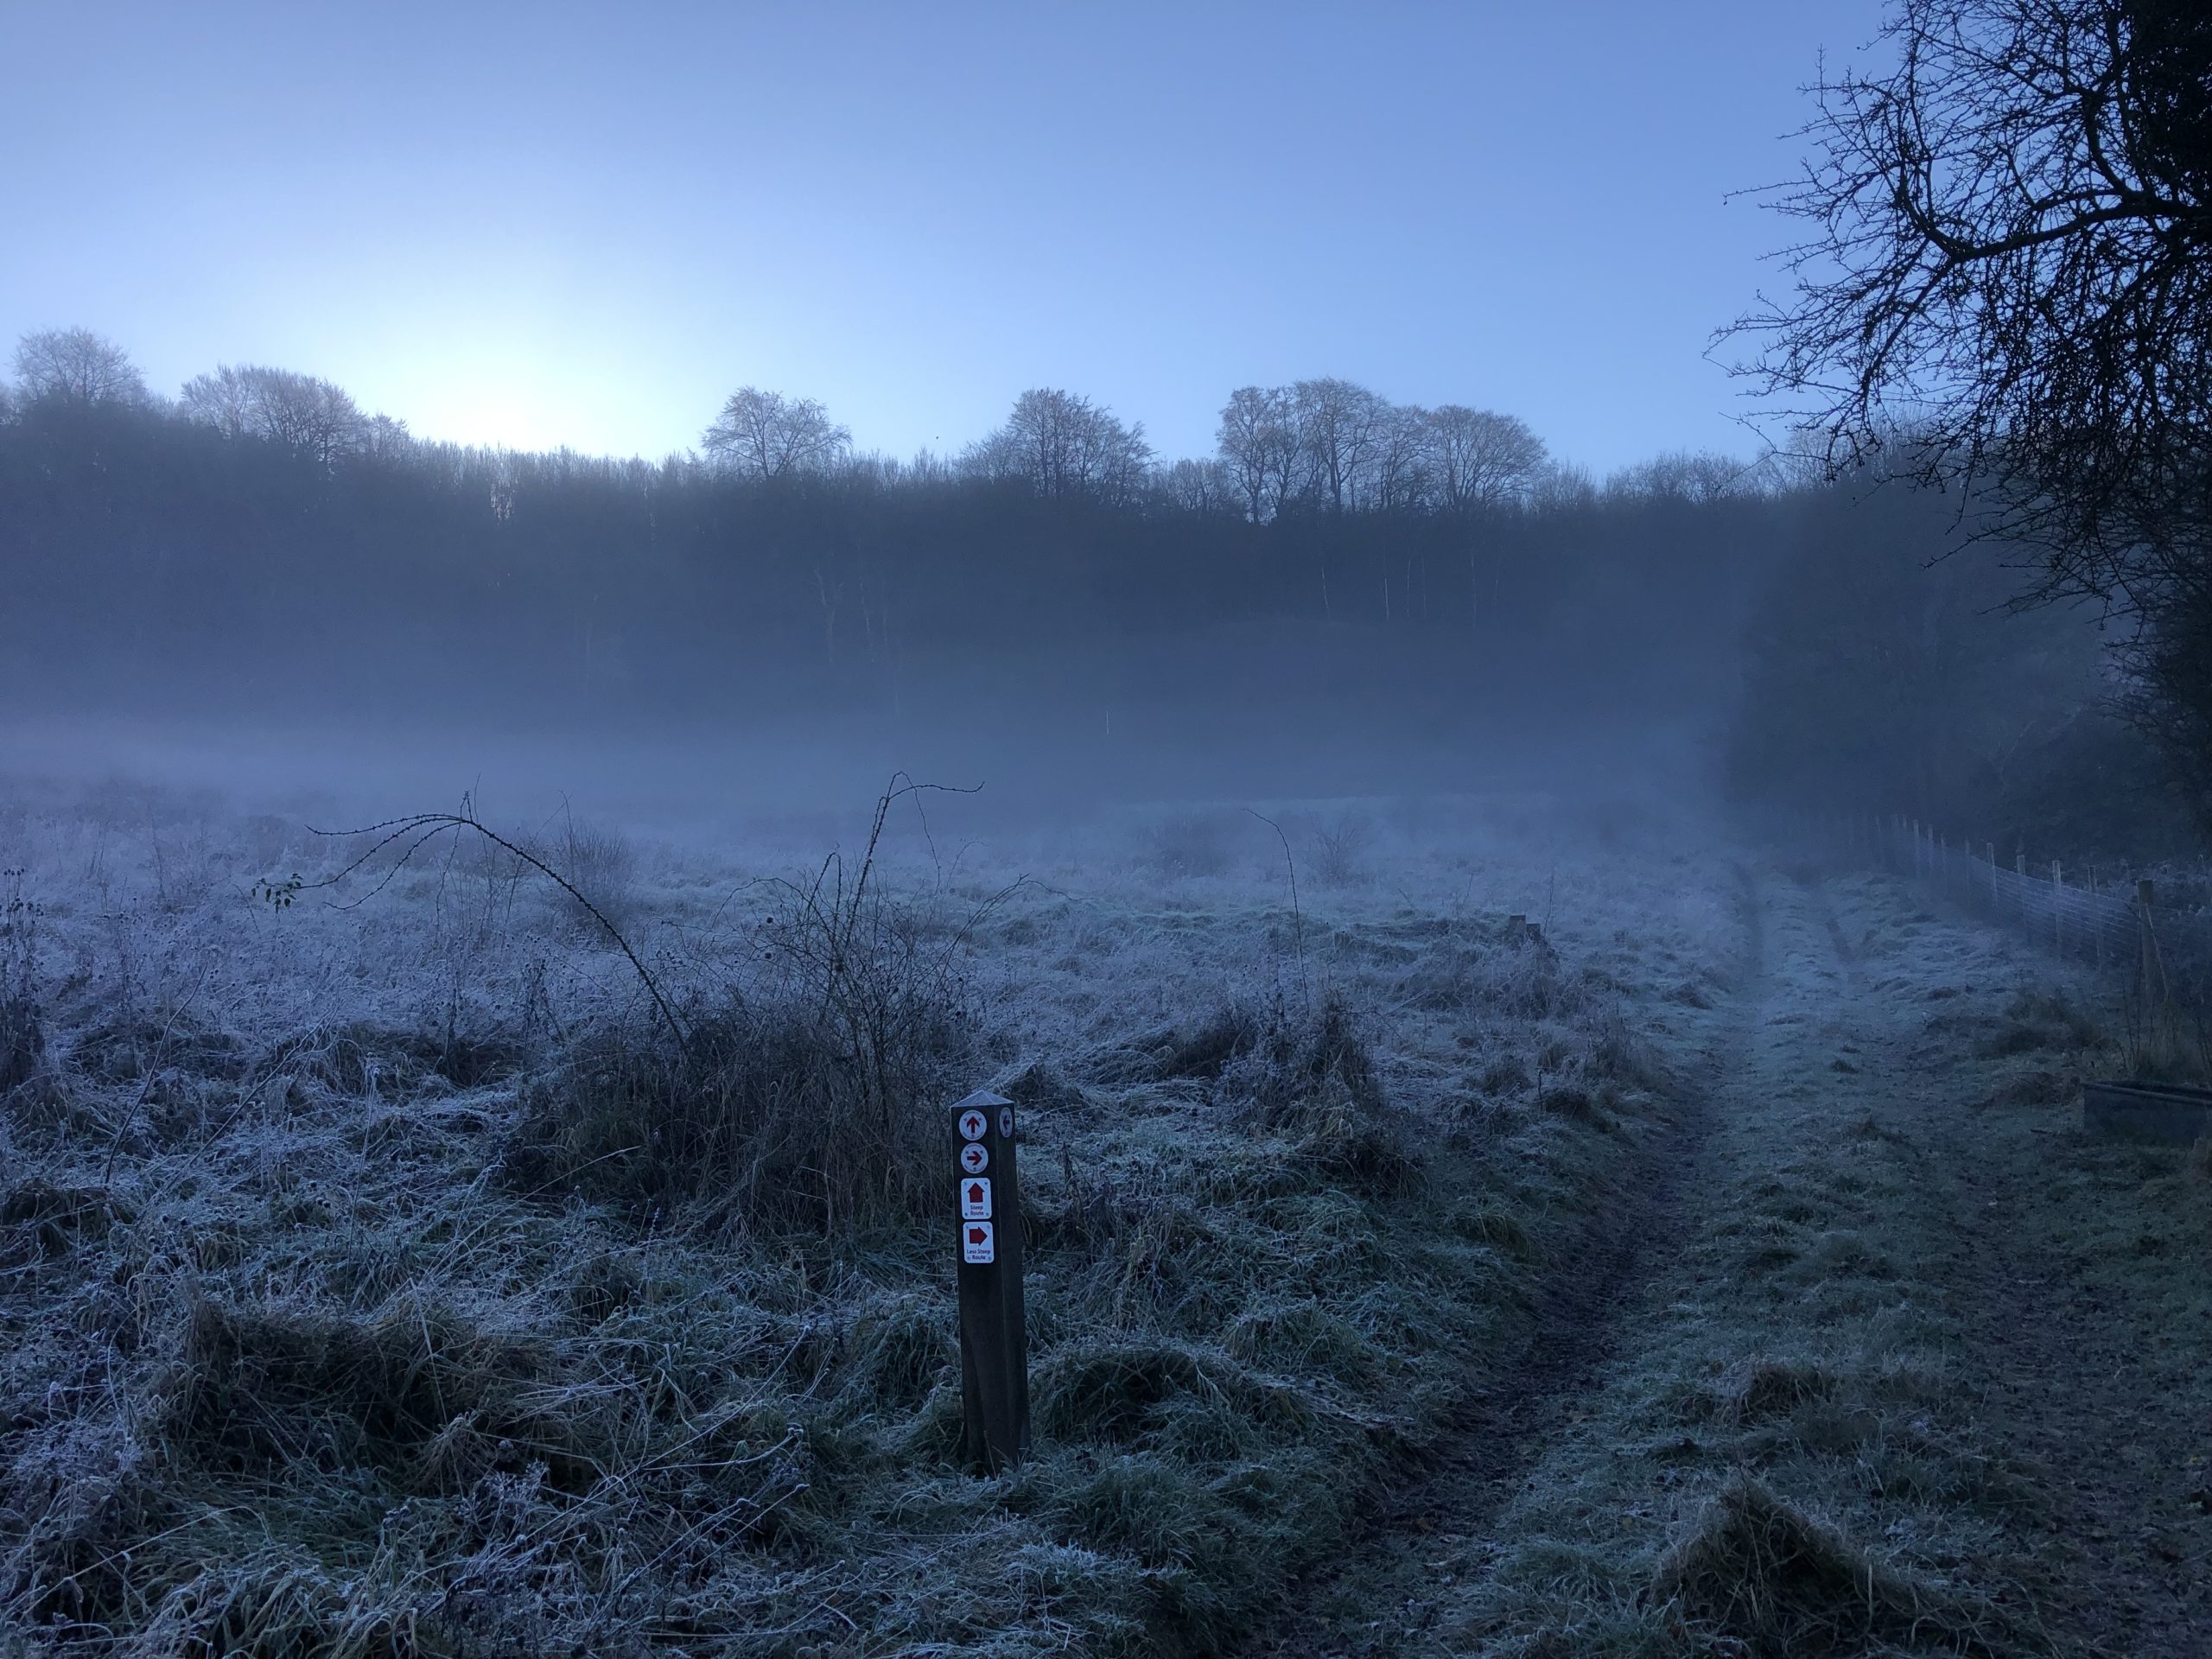 Footpath across field with mist